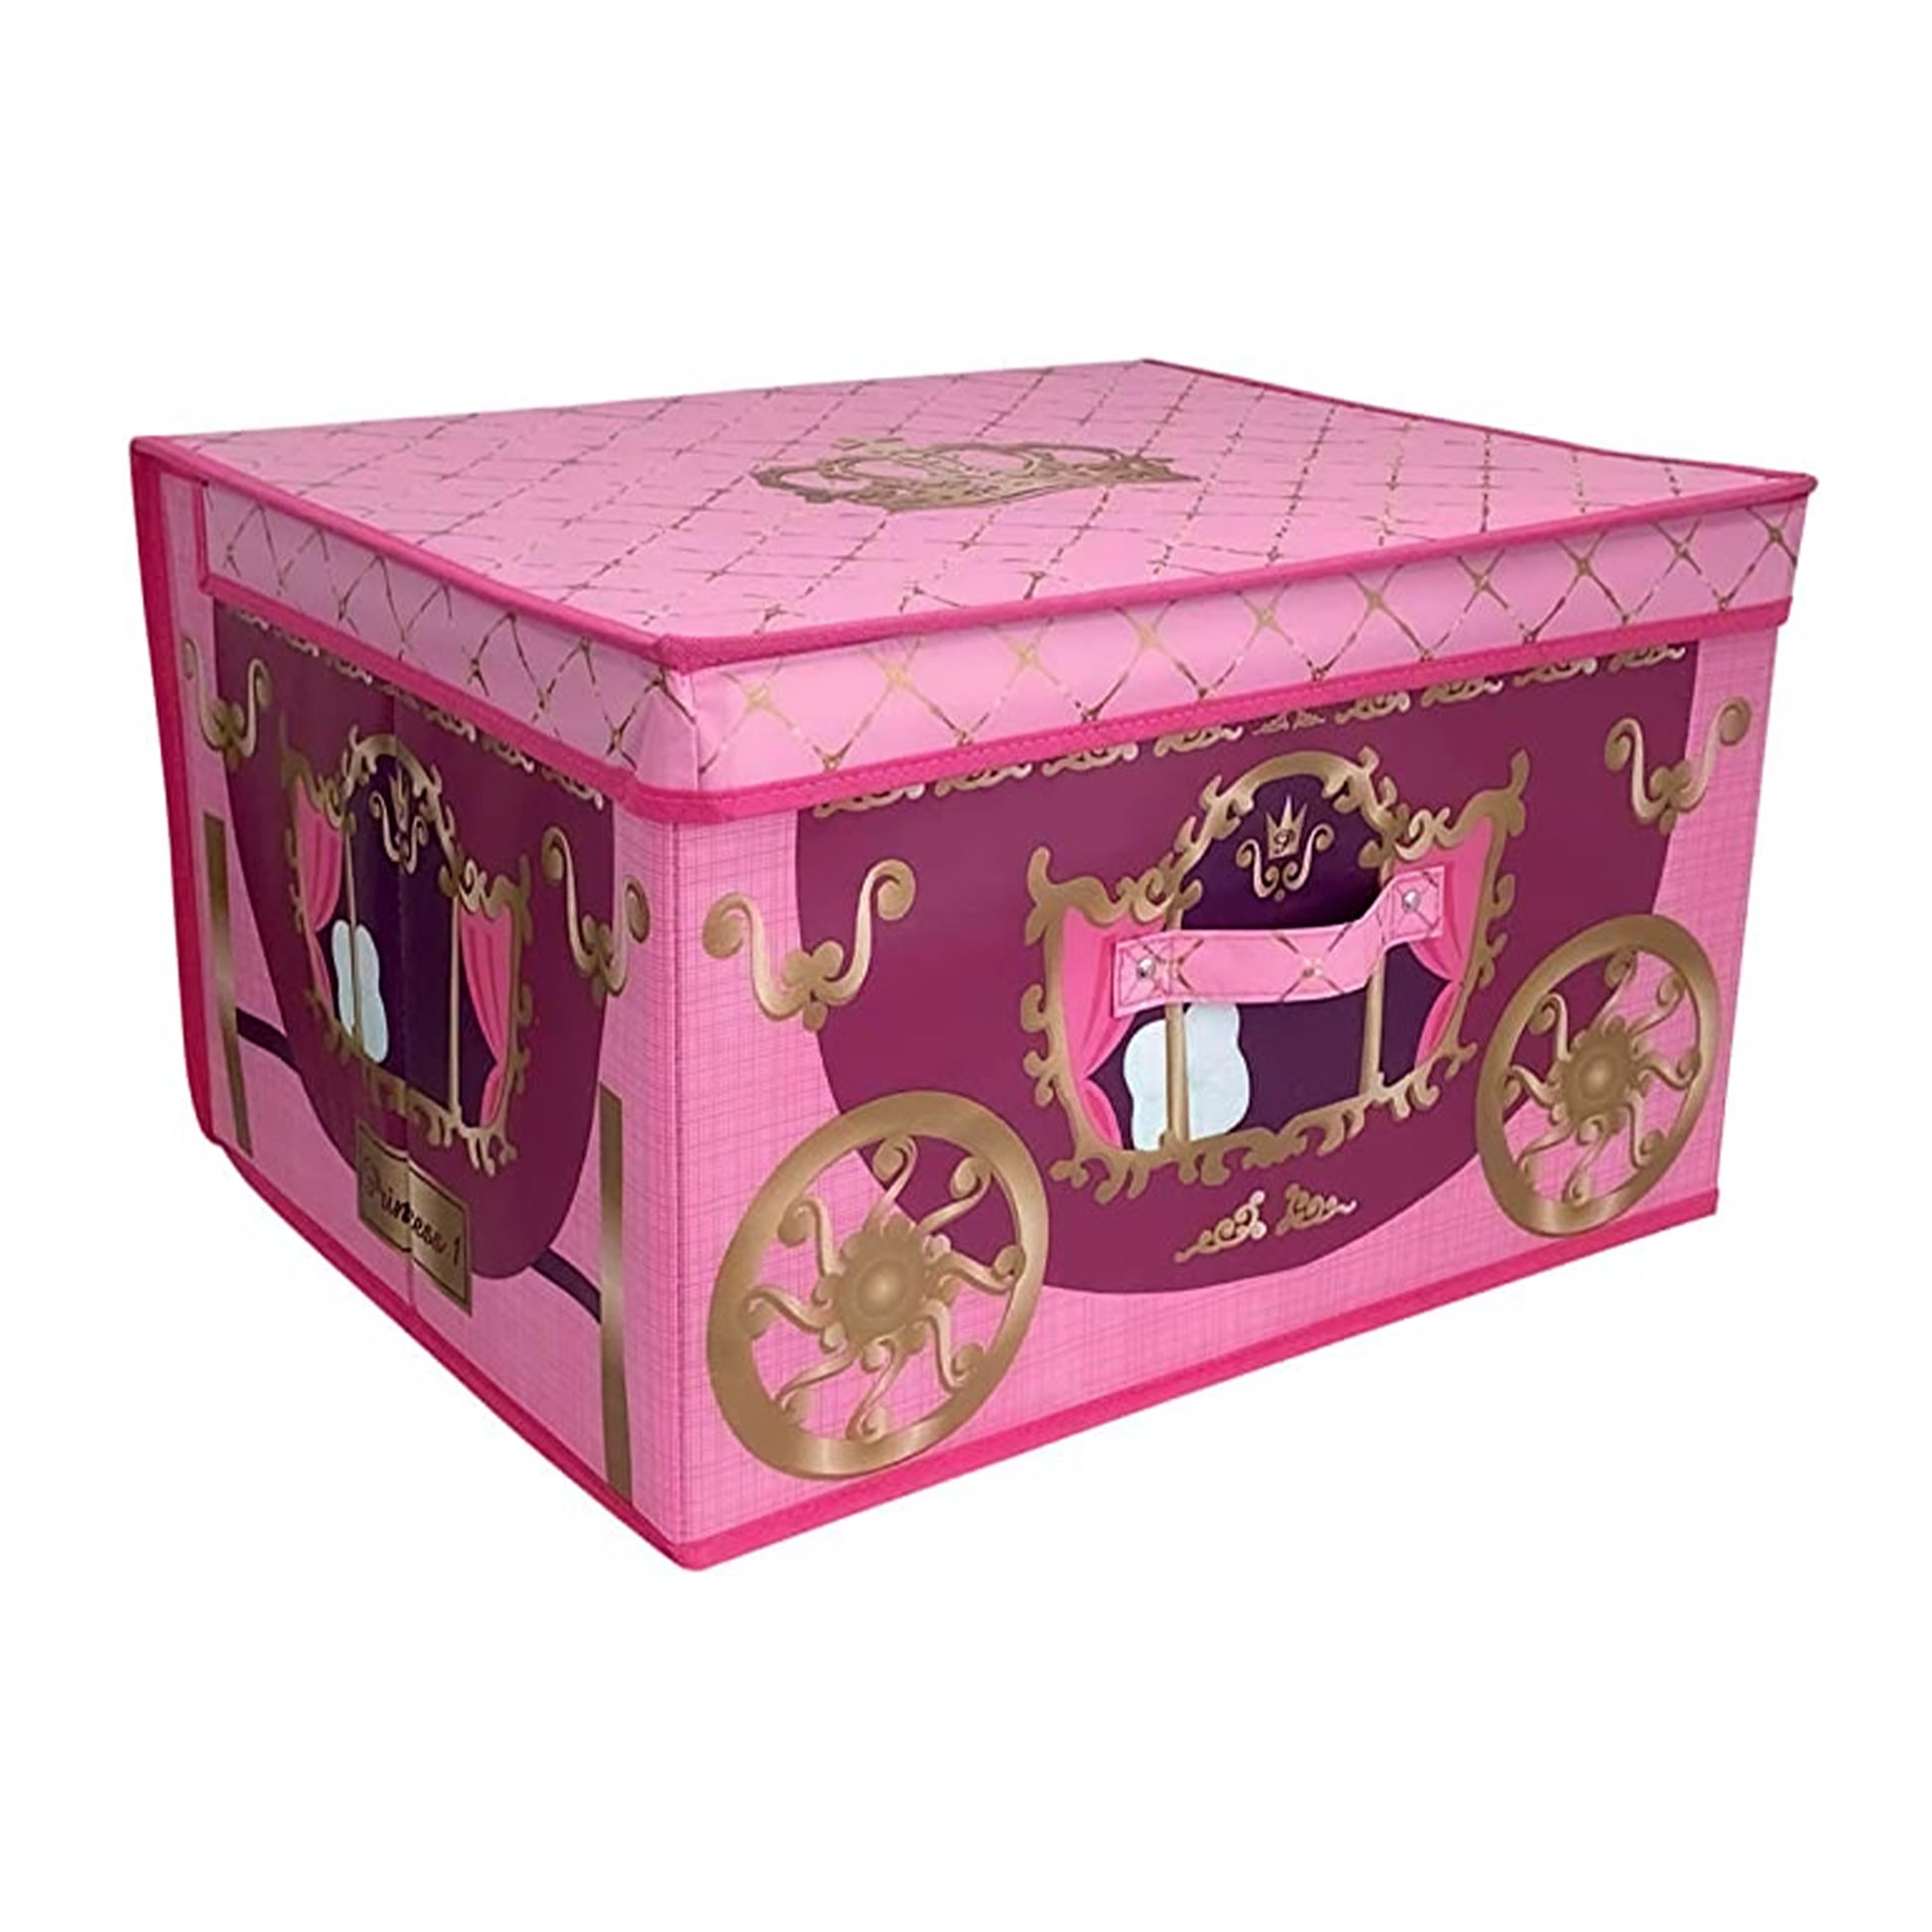 Carriage Large Storage Box by The Magic Toy Shop - UKBuyZone